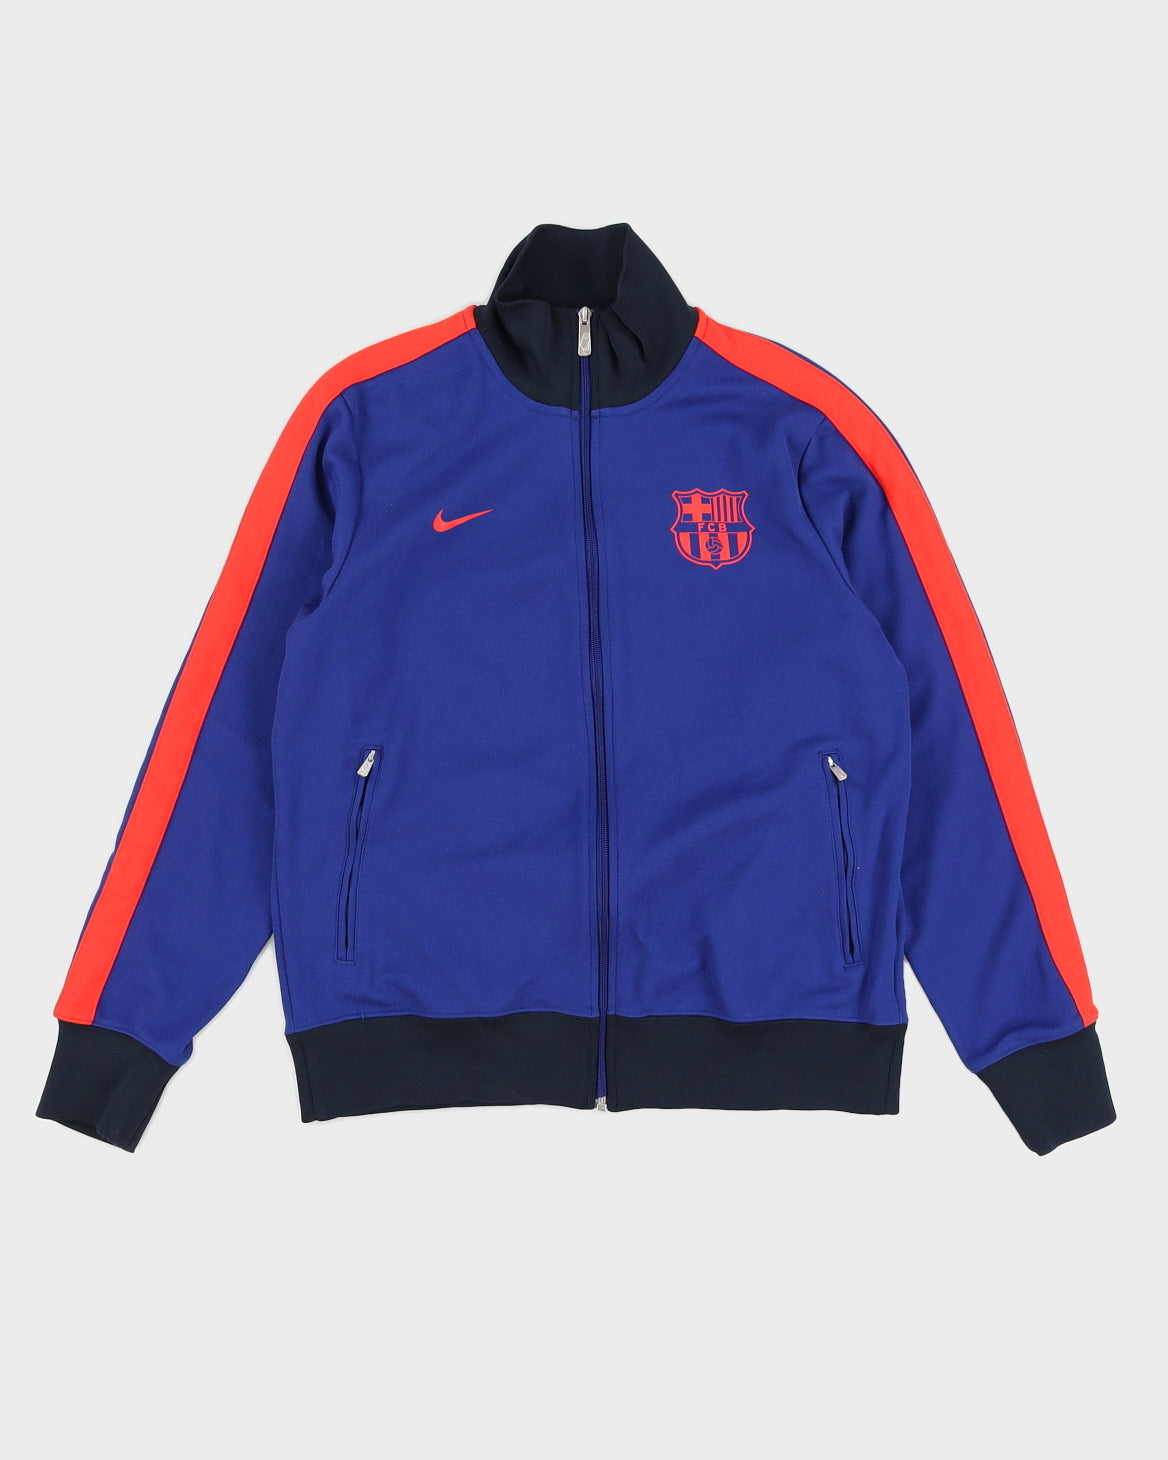 Nike FC Barcelona Zip Up Jacket - XL